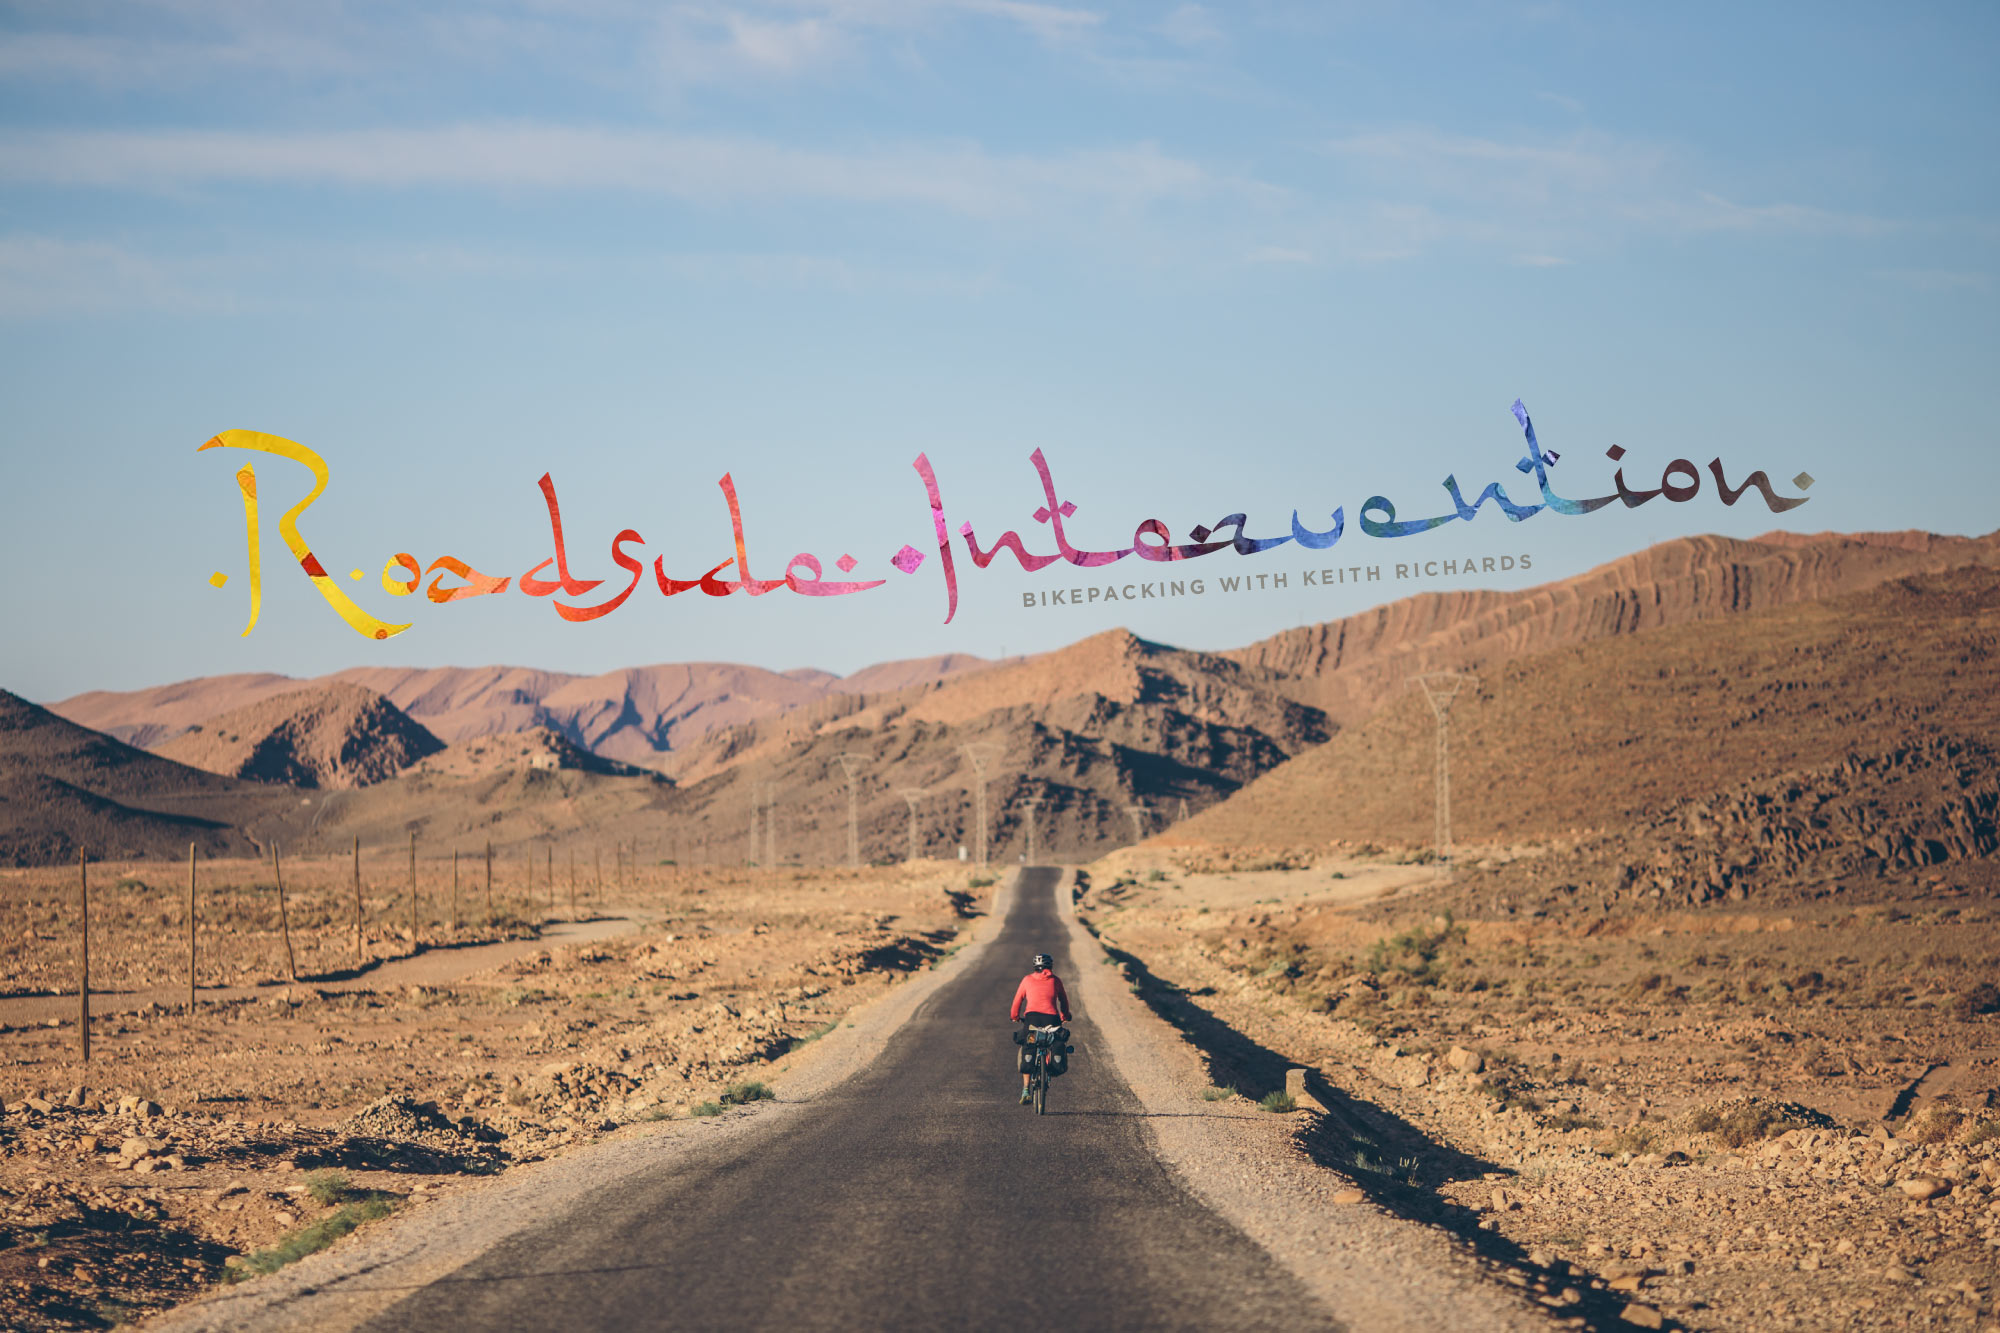 Roadside Intervention, Bikepacking Morocco